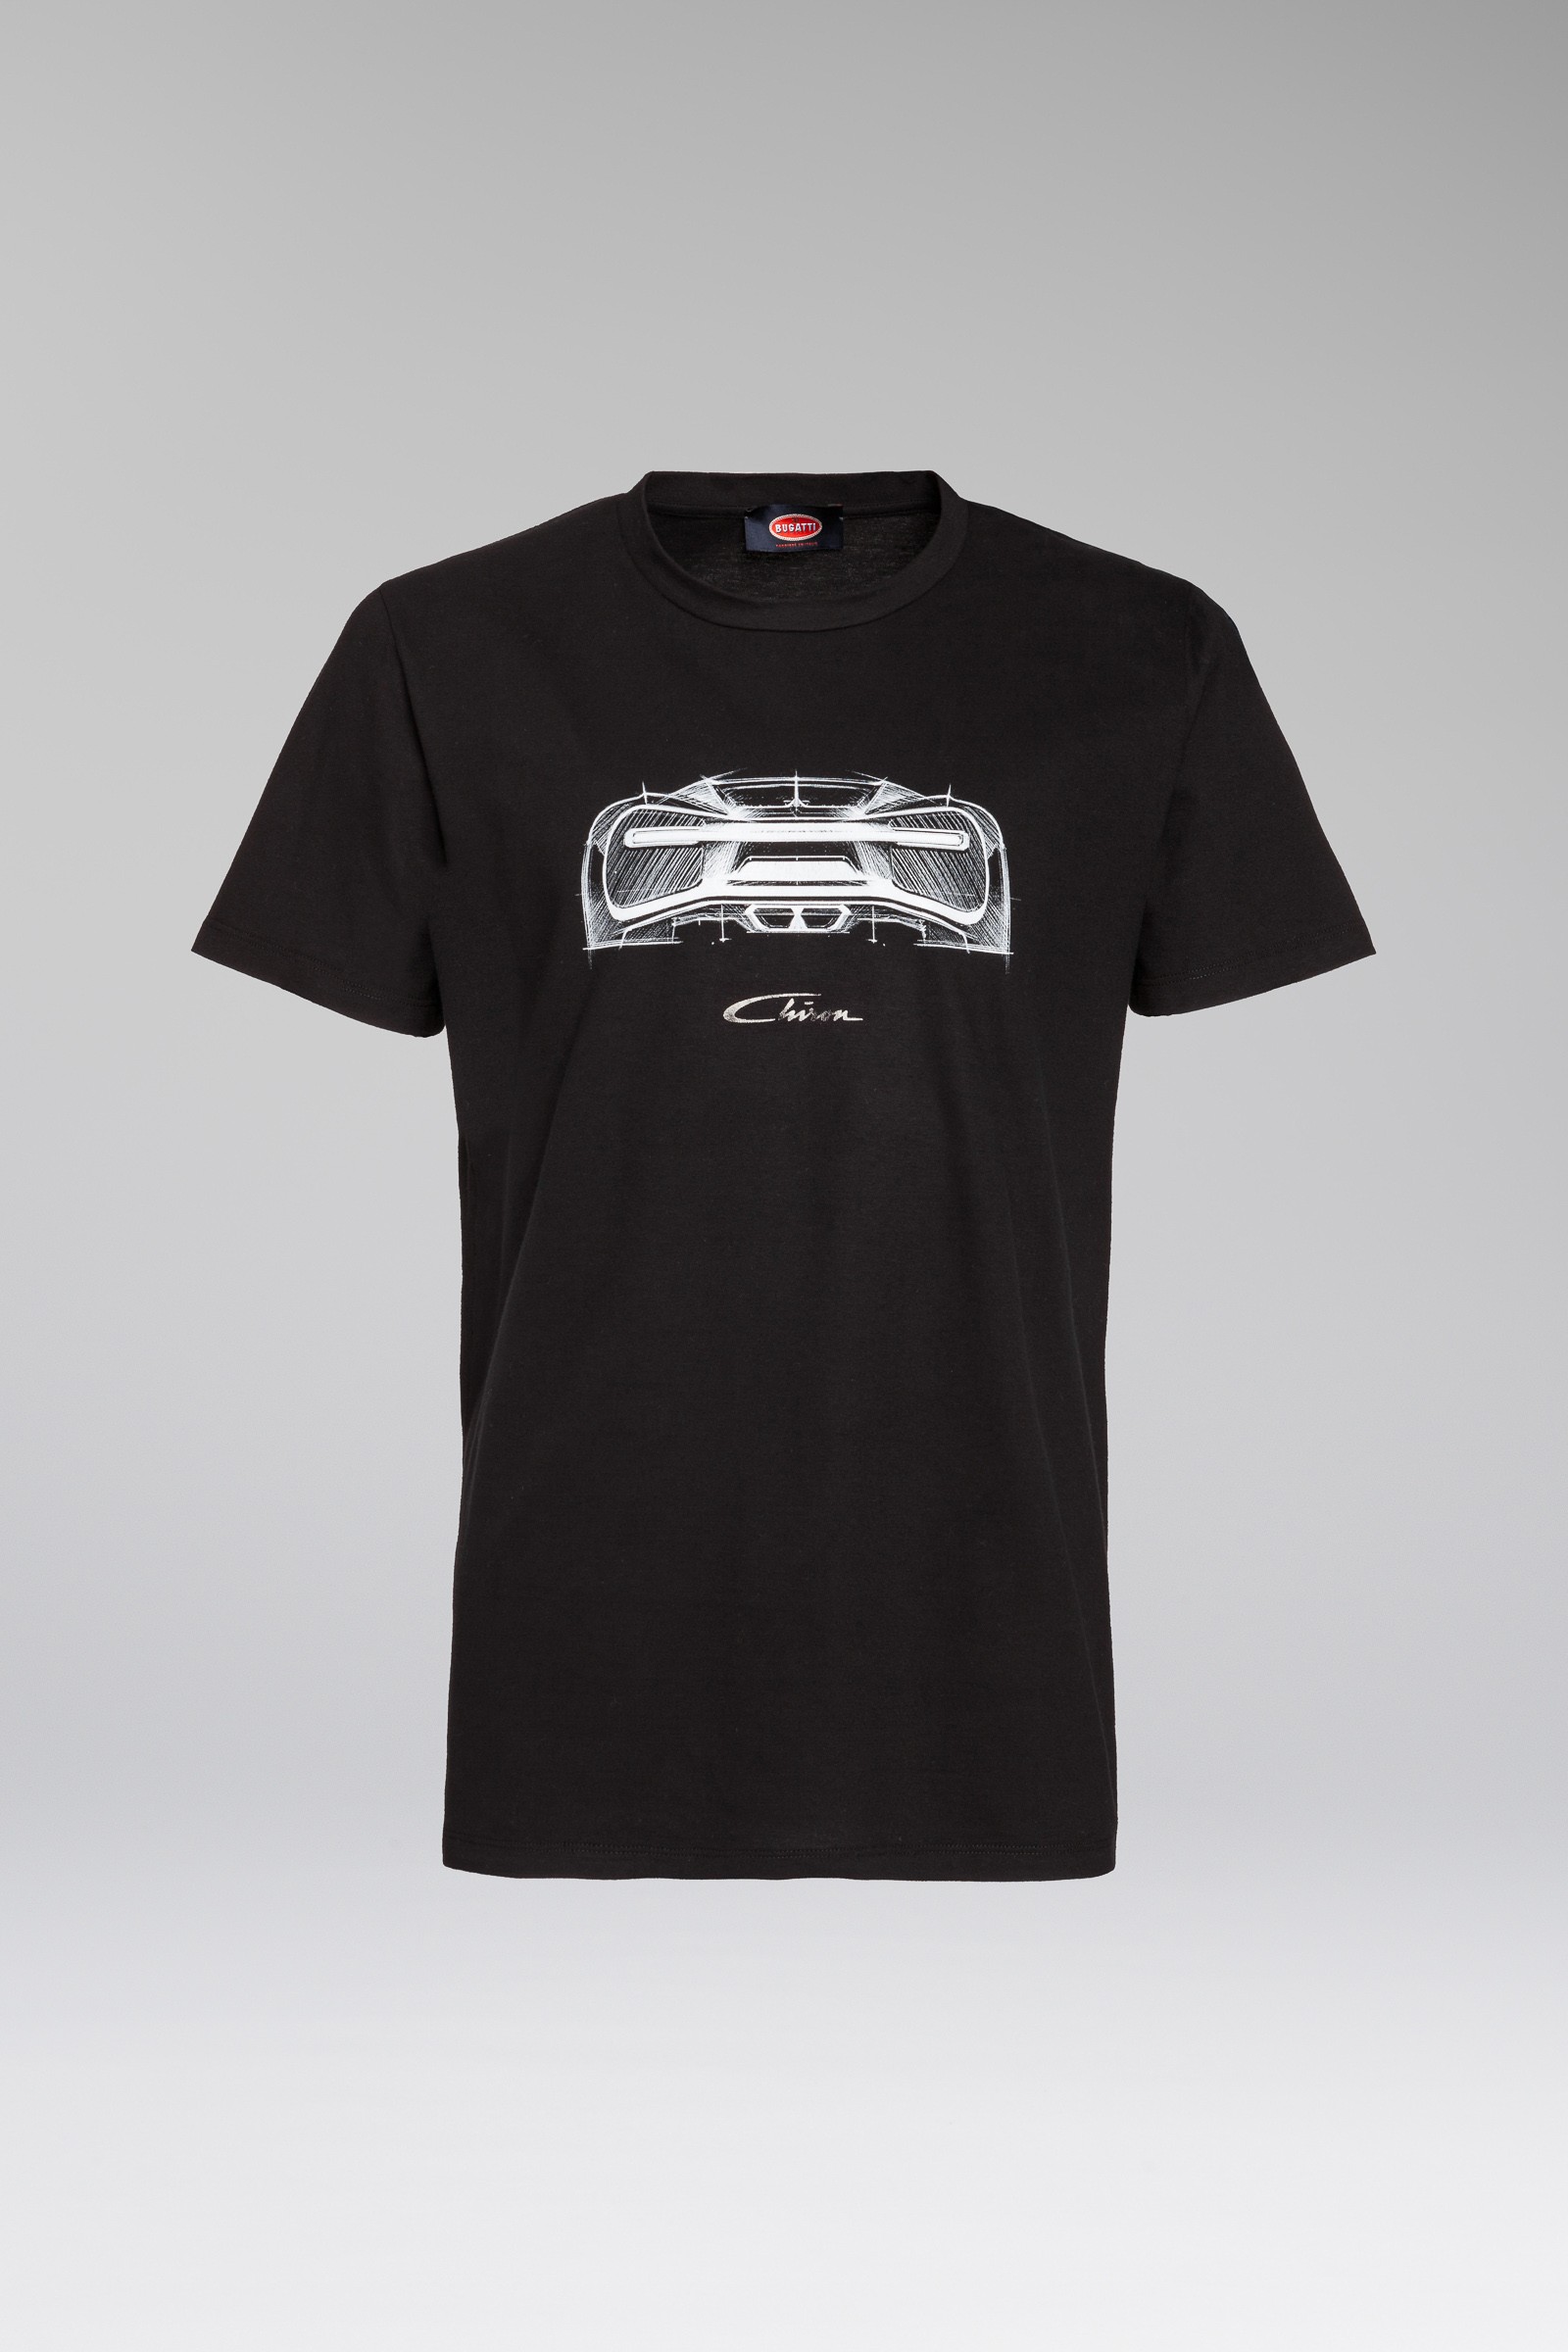 Black Bugatti - T-Shirt by Choice Chiron Gear